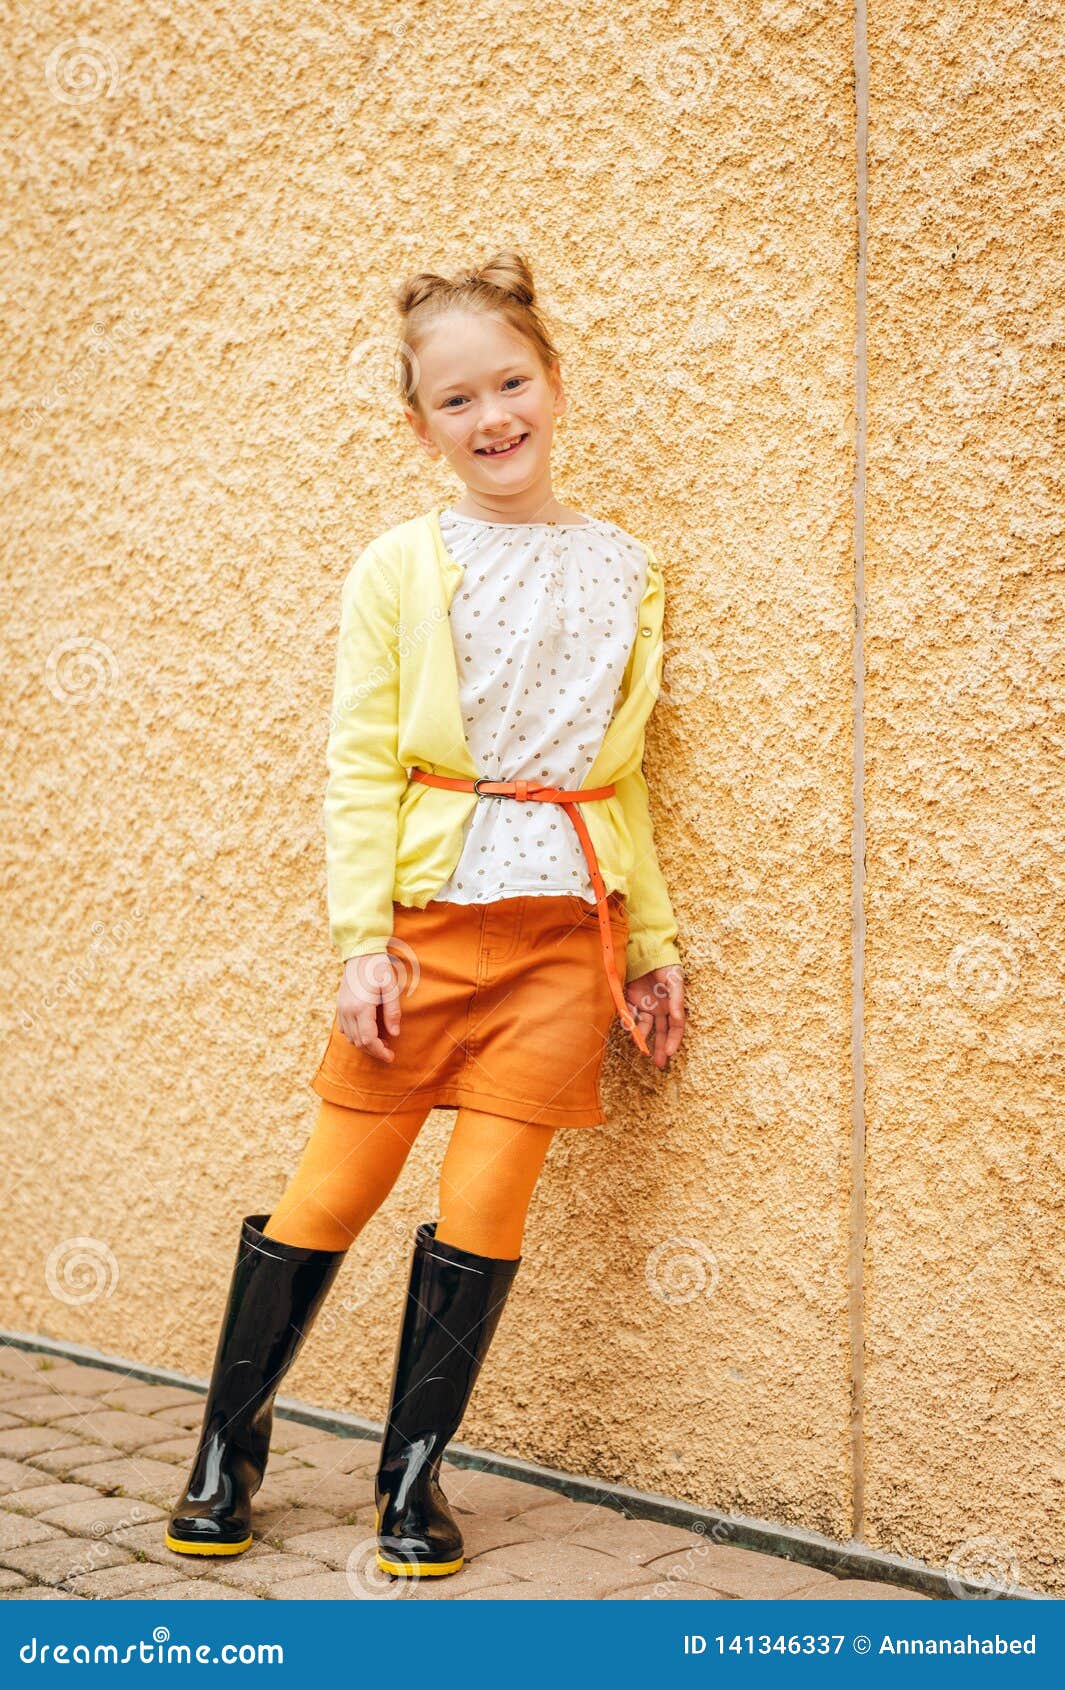 little girl fashion boots